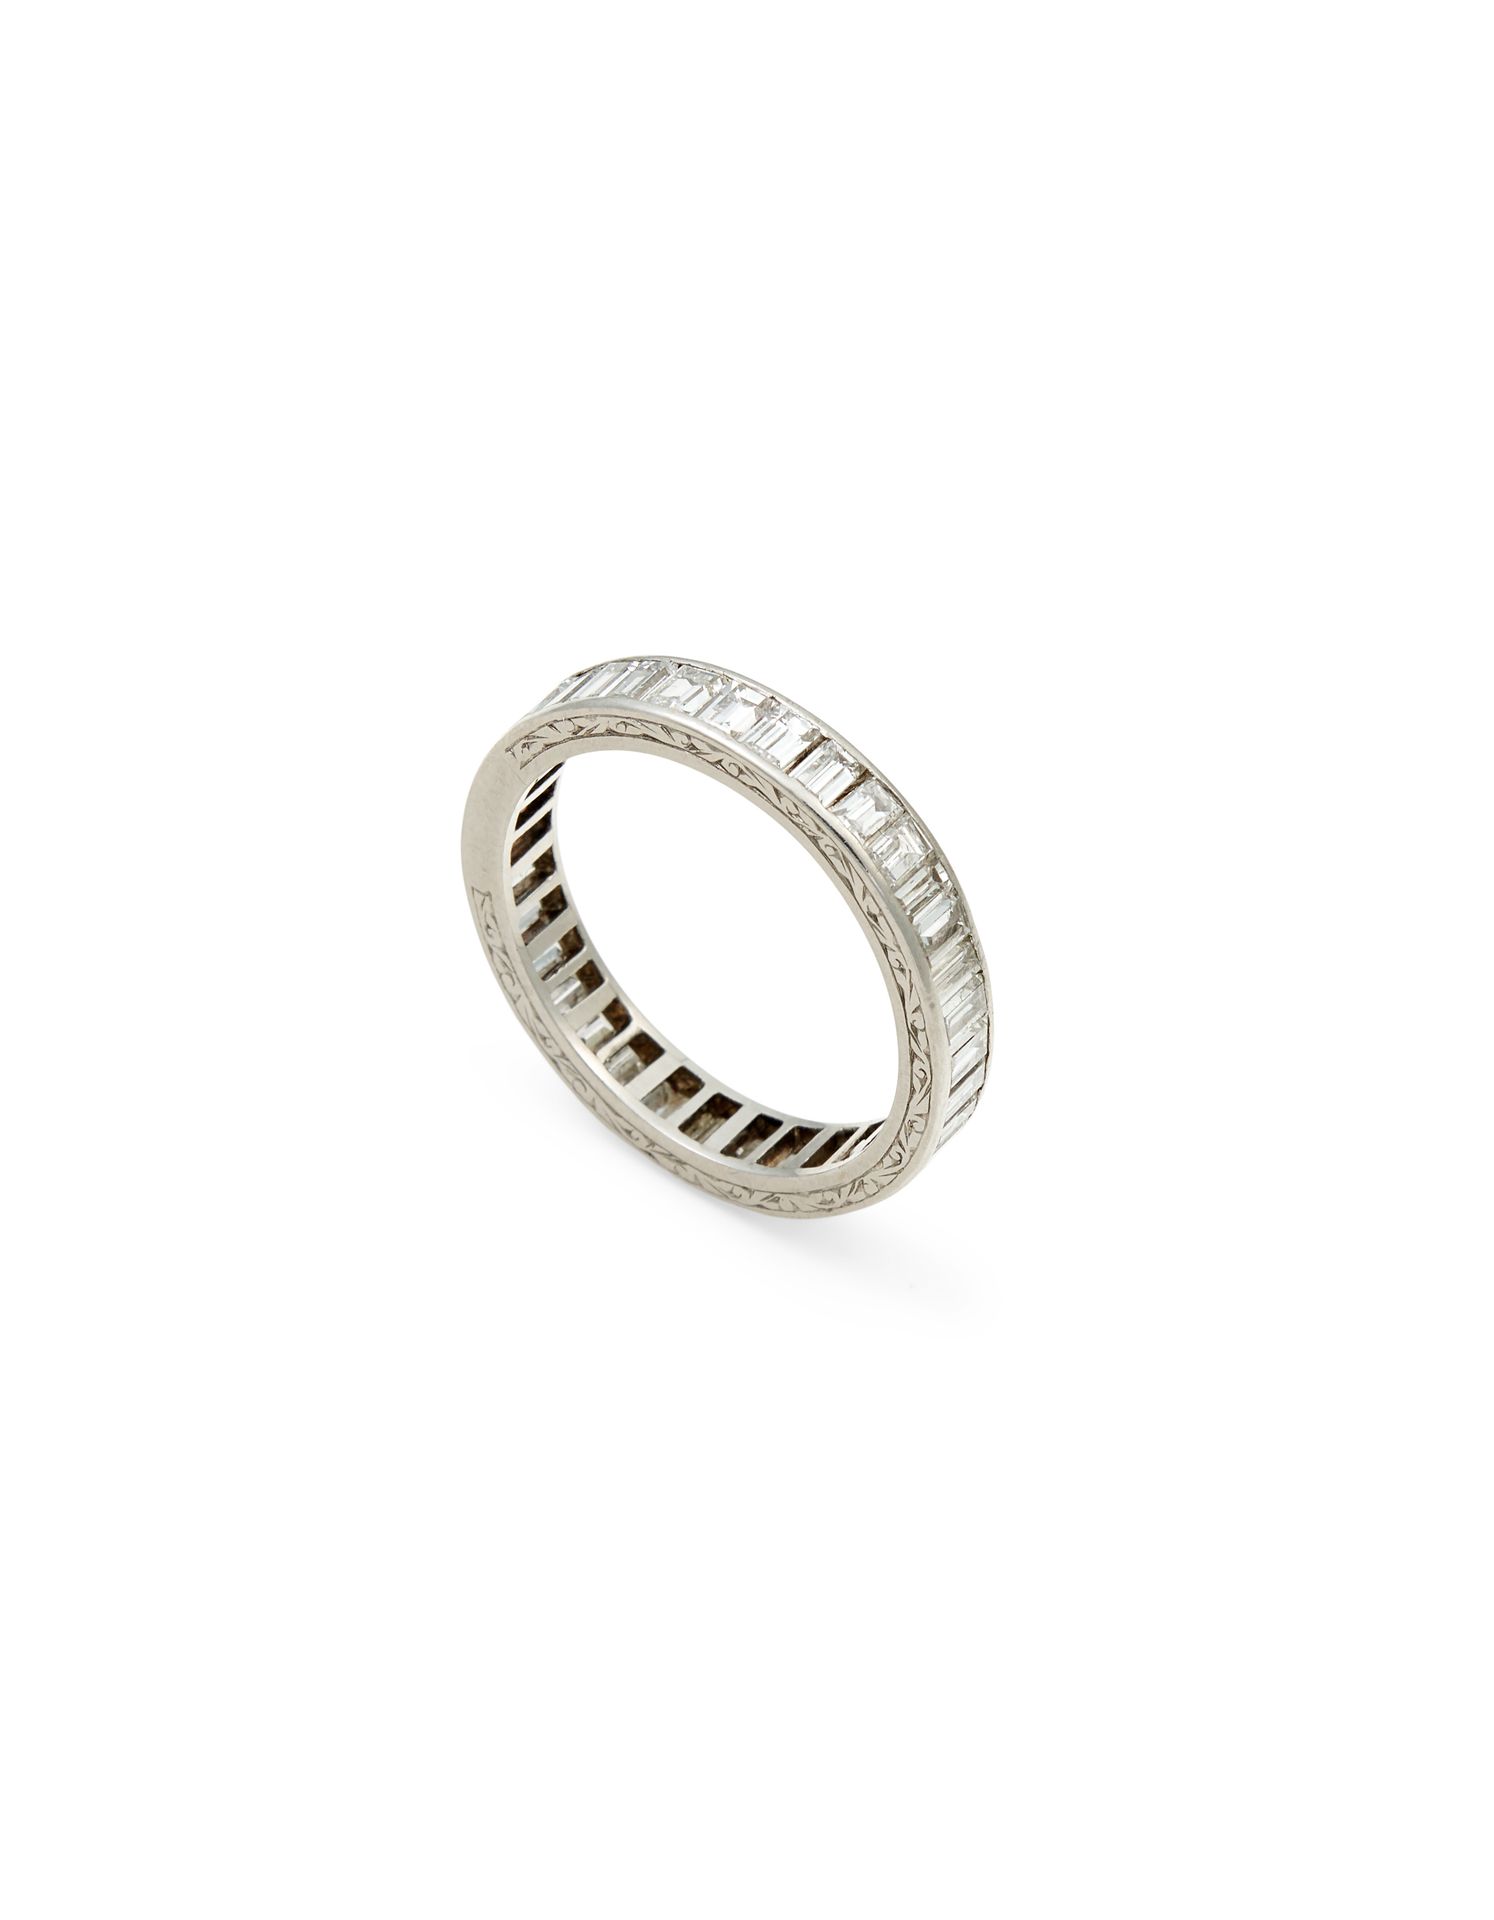 Null 婚礼戒指/美国联盟 18K白金，镶嵌长方形切割钻石。

印记：无

尺寸：55 - Tw:3,9 g